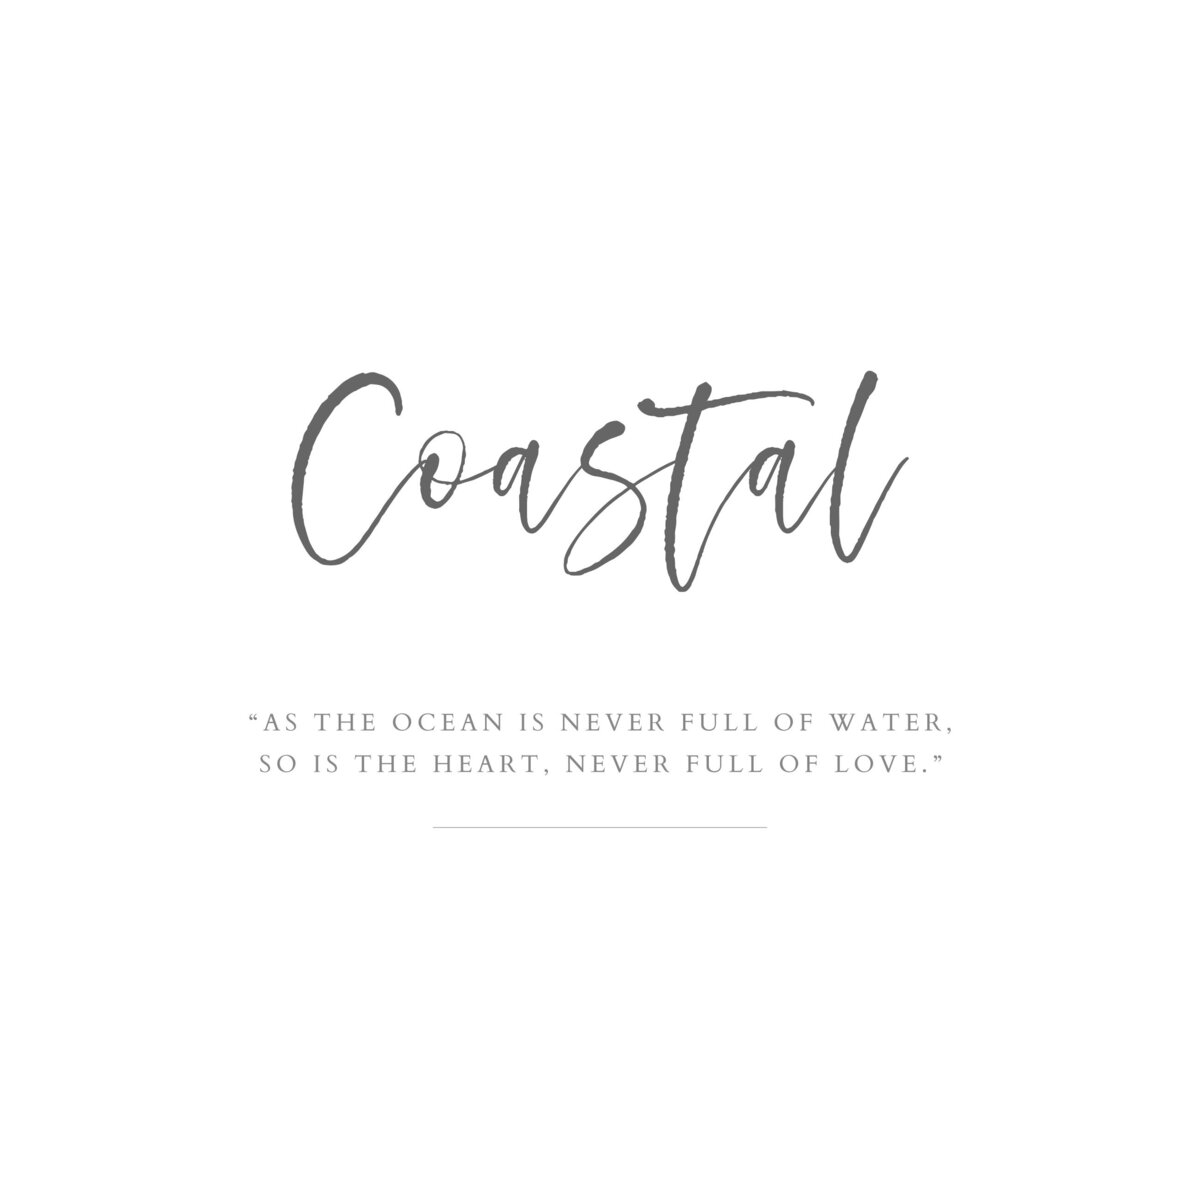 01_Coastal_Title Page